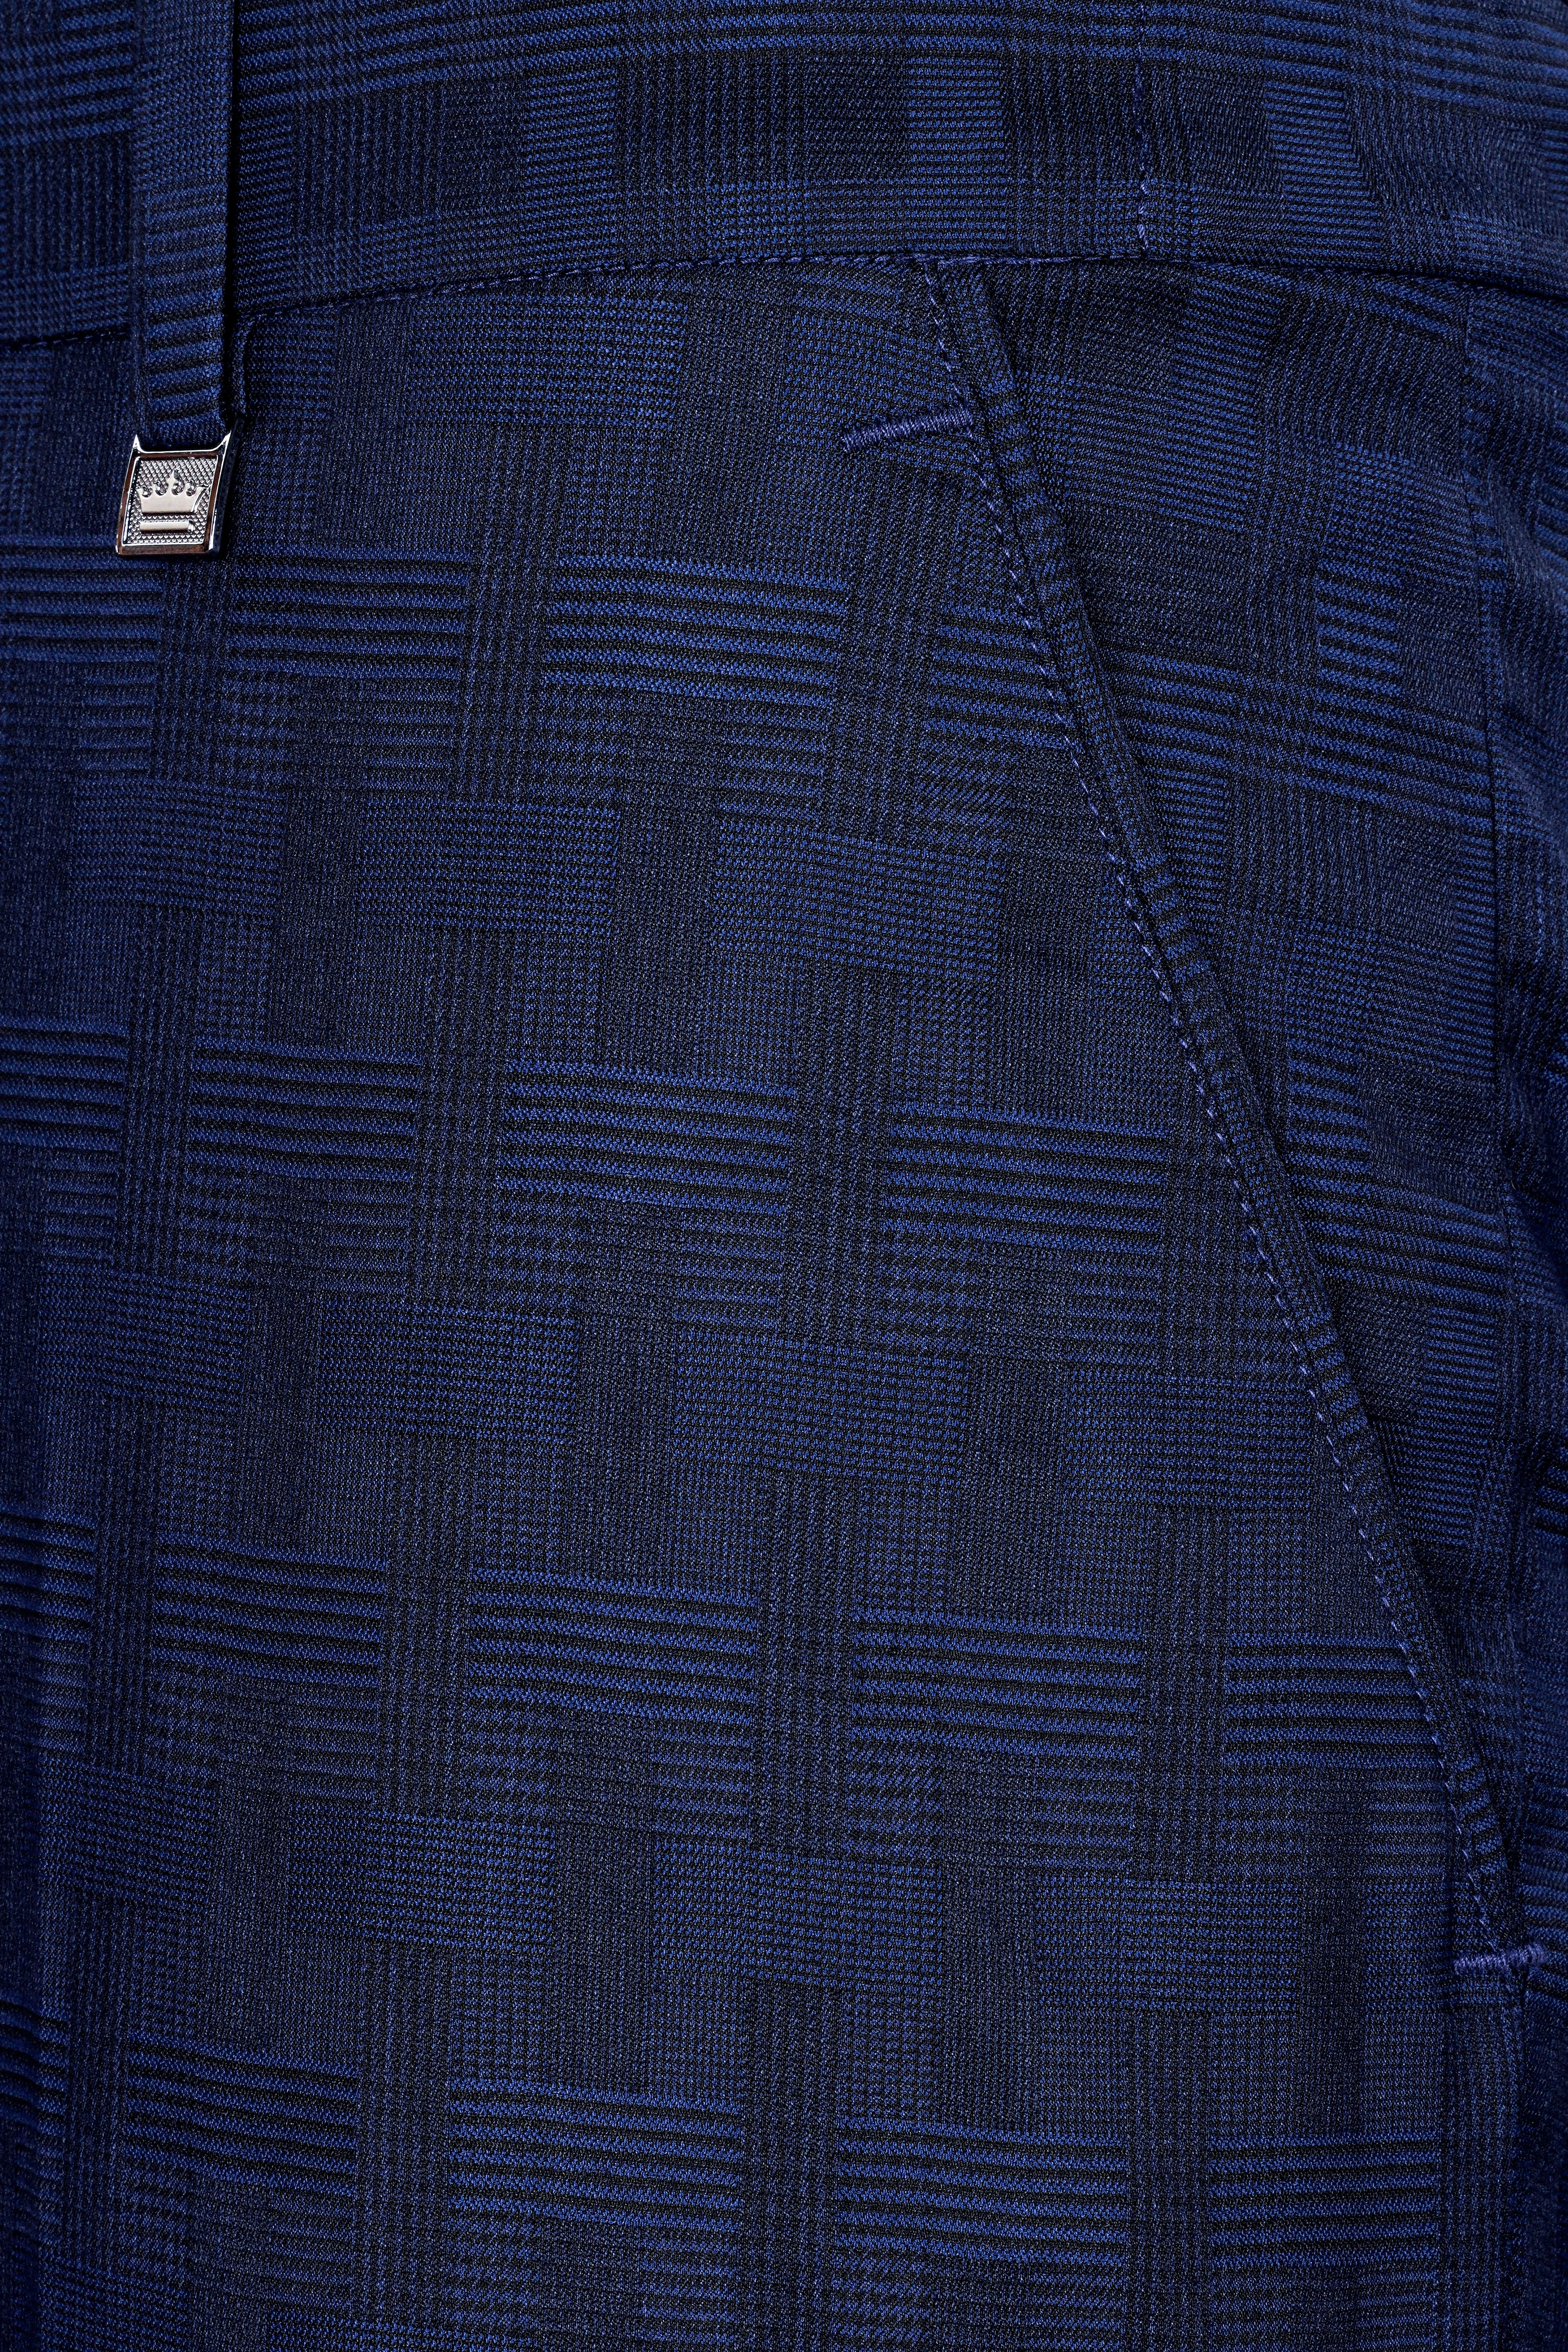 Haiti Blue Wool Rich Cross Placket Bandhgala Suit